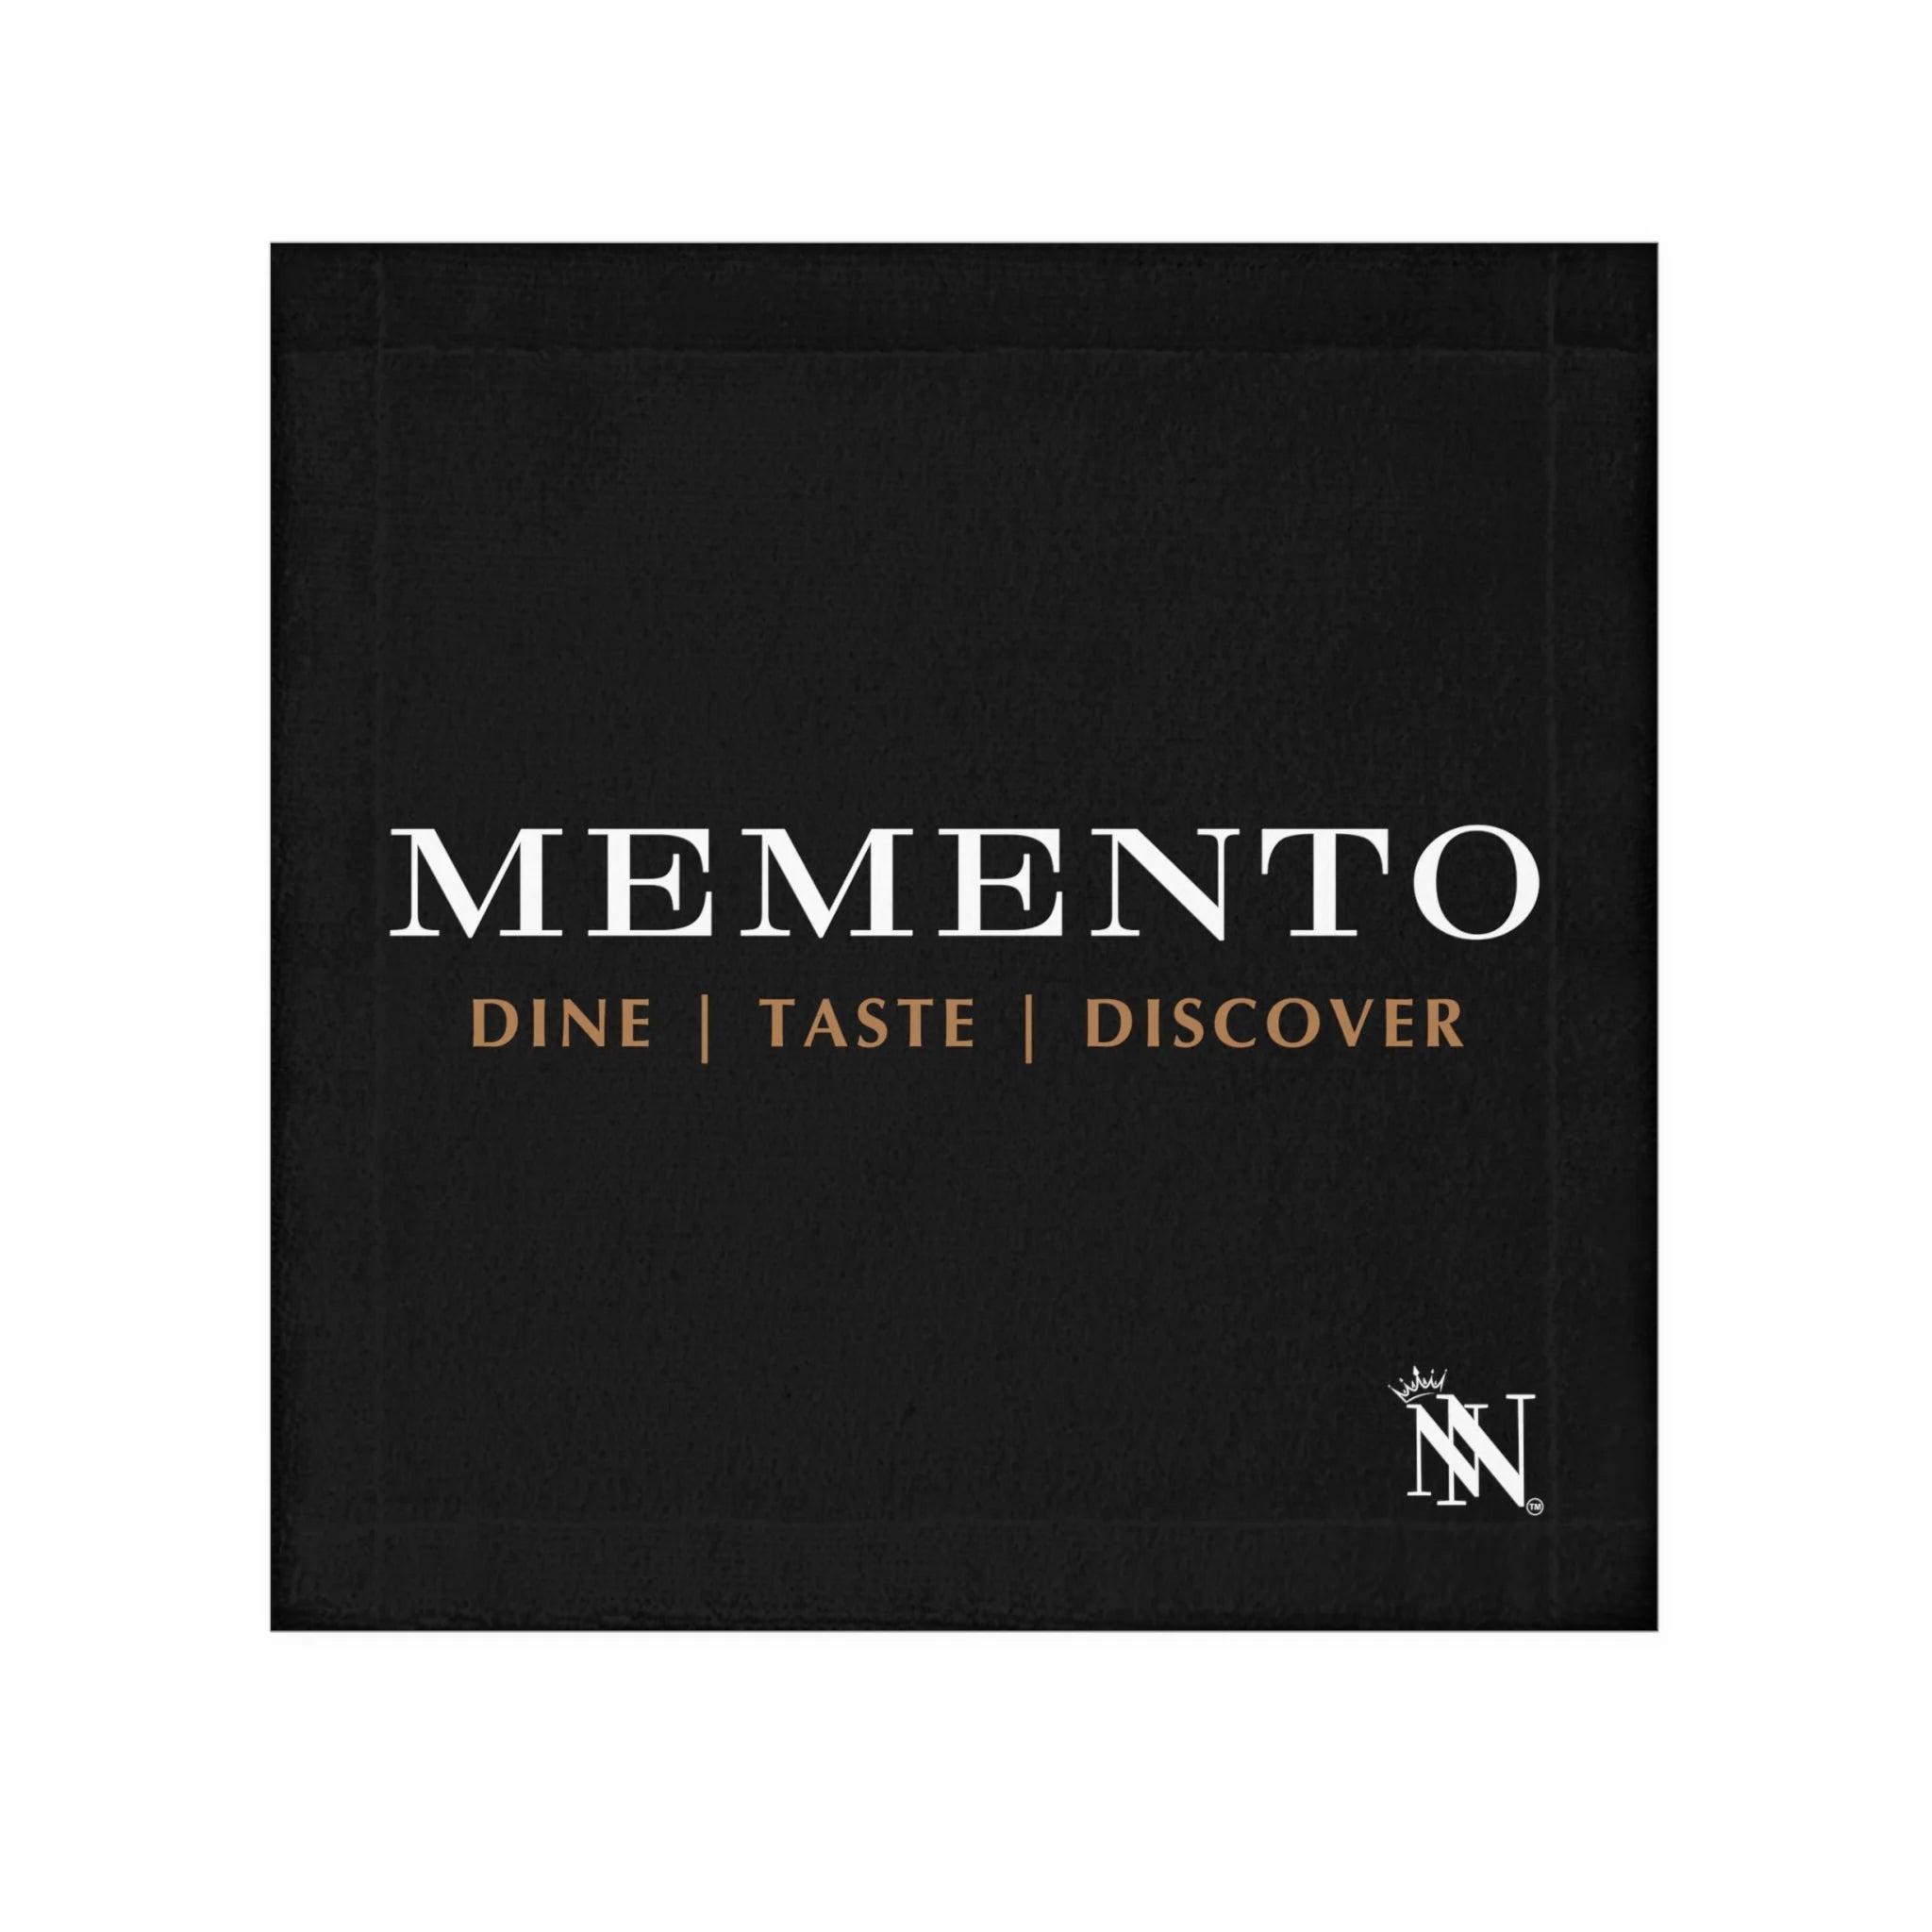 Memento sex towel